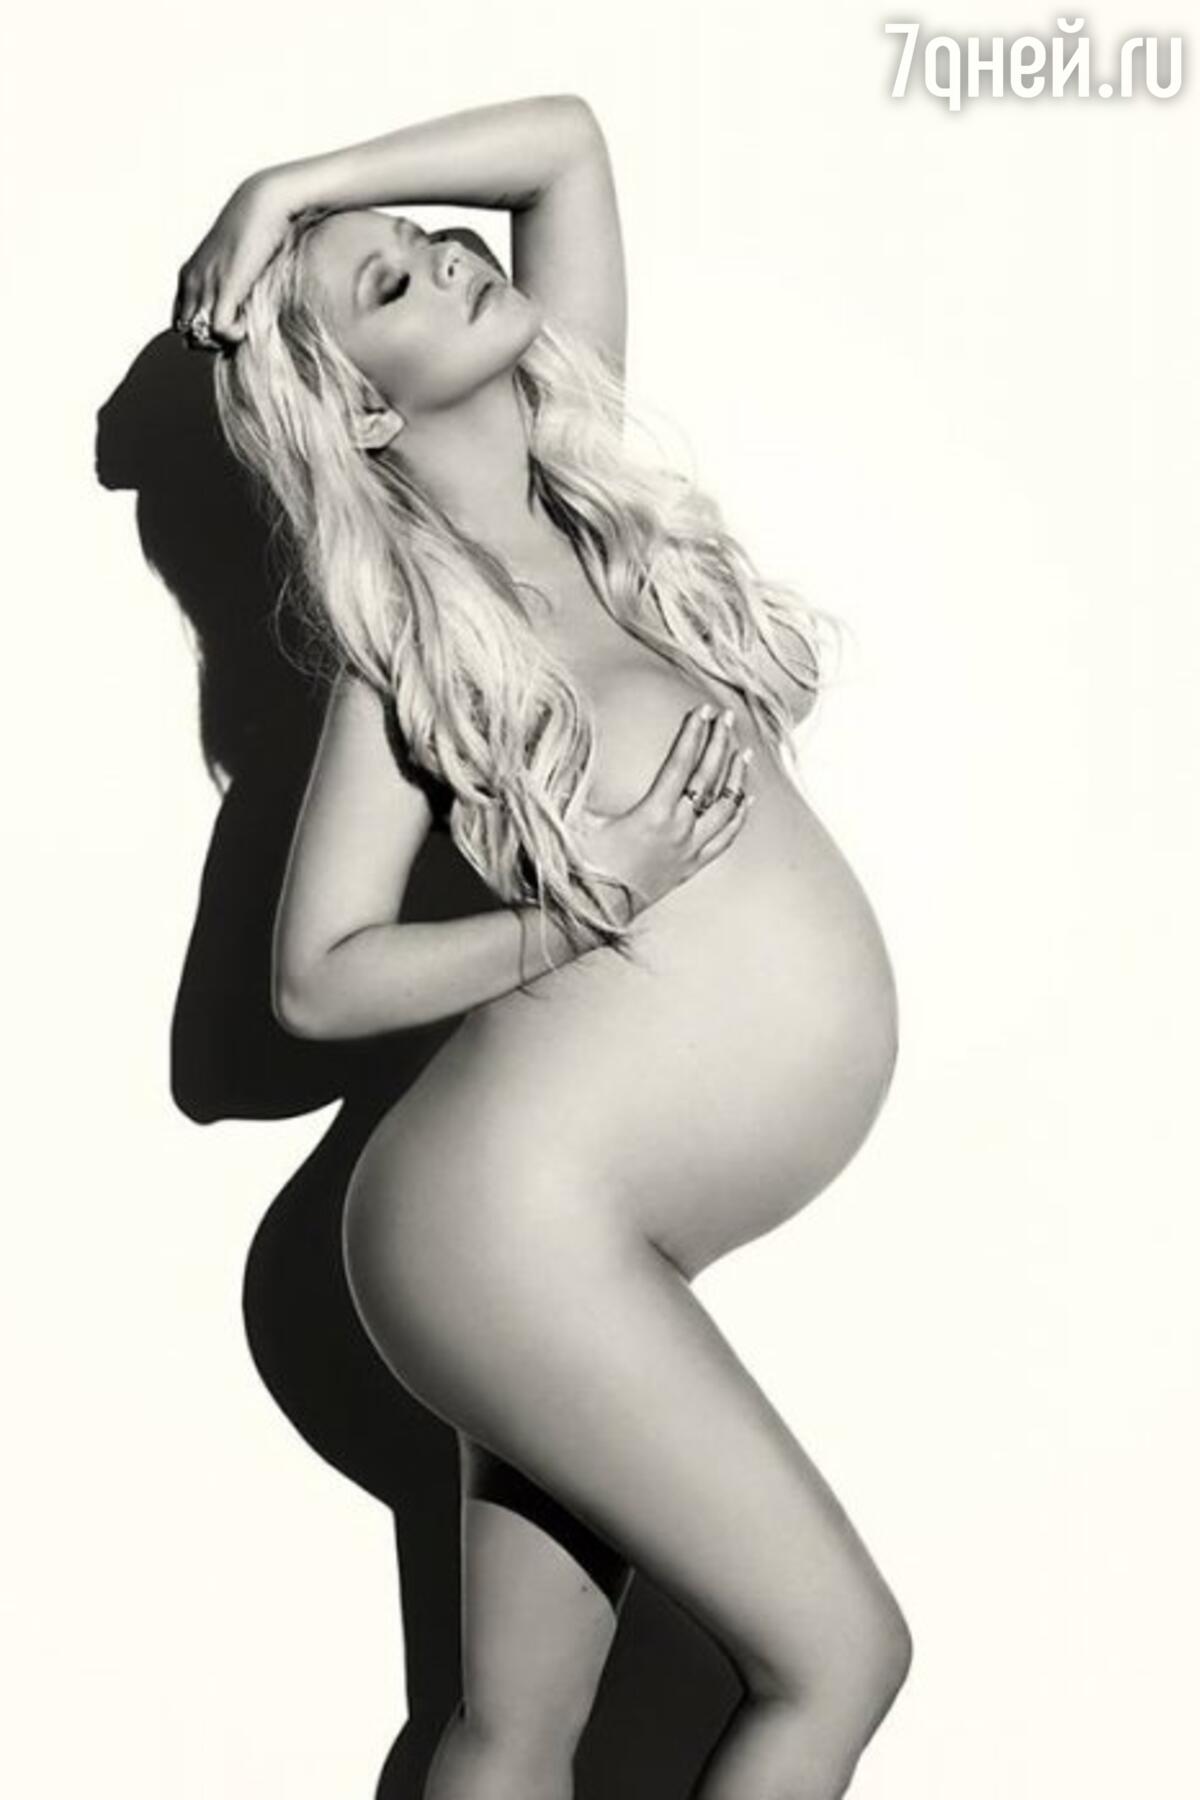 Голая Кристина Агилера фото – Christina Aguilera nude